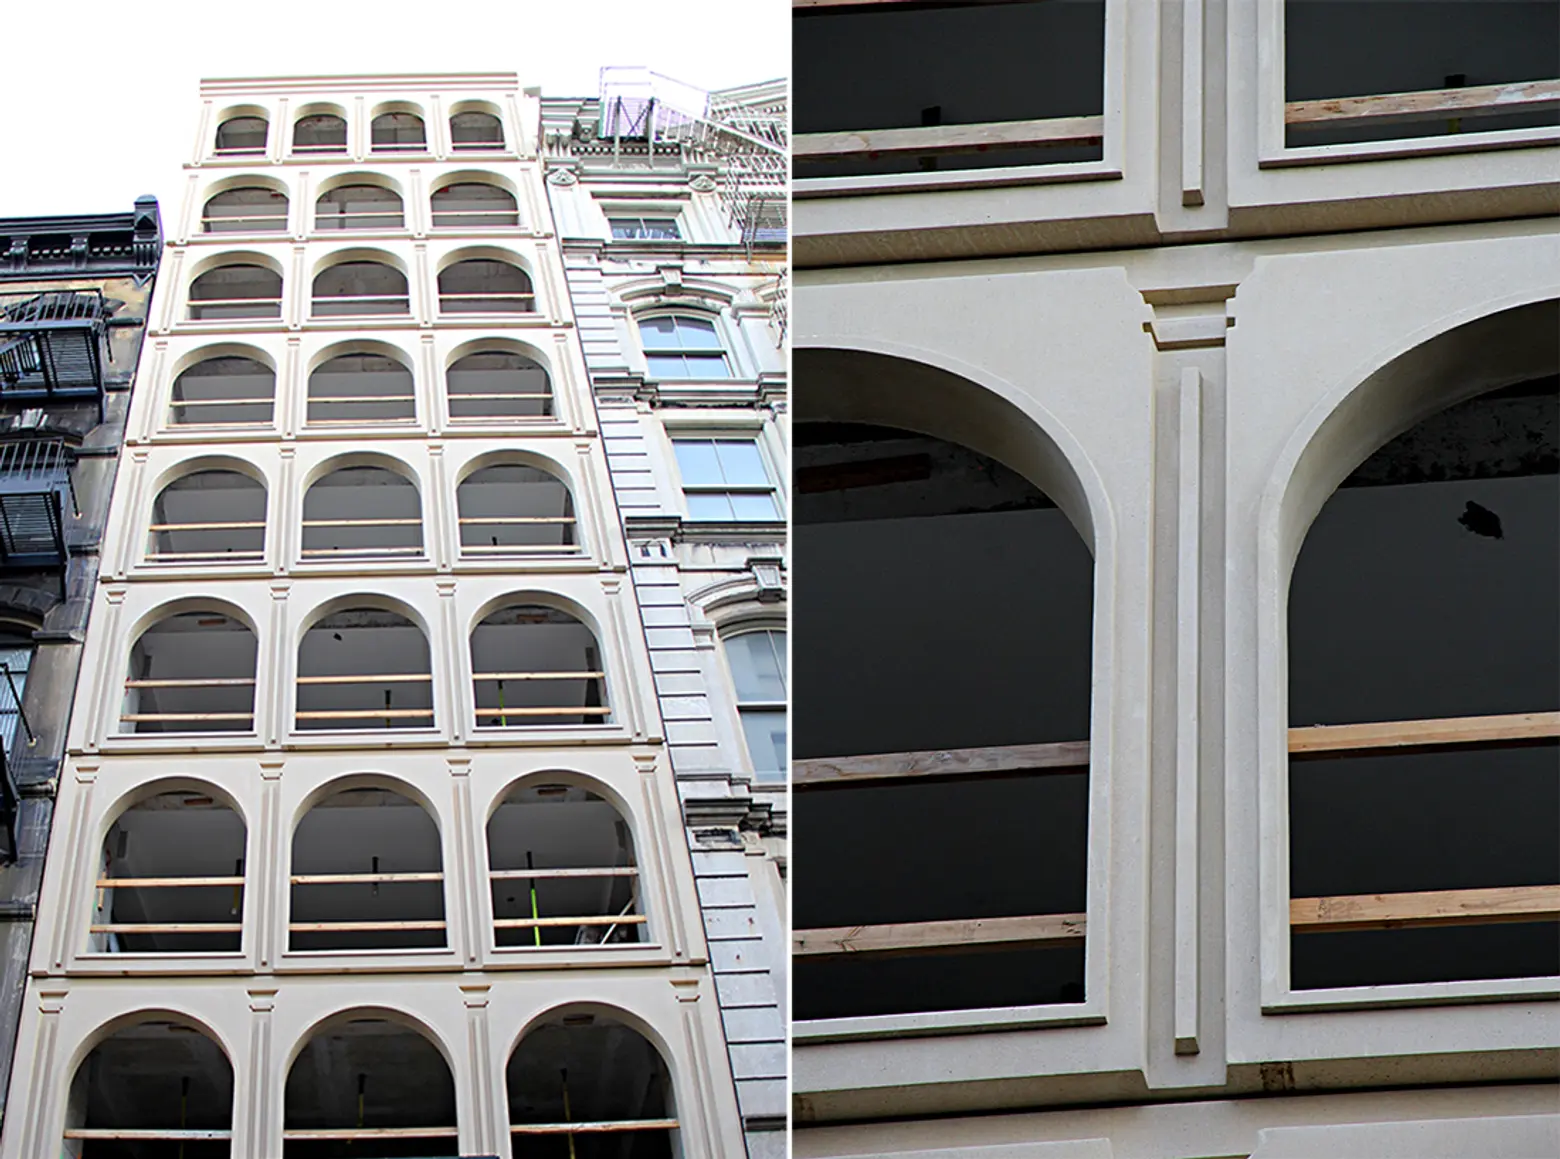 Morris Adjmi’s Tribeca Condo Building at 83 Walker Street Gets Its Inverted Facade